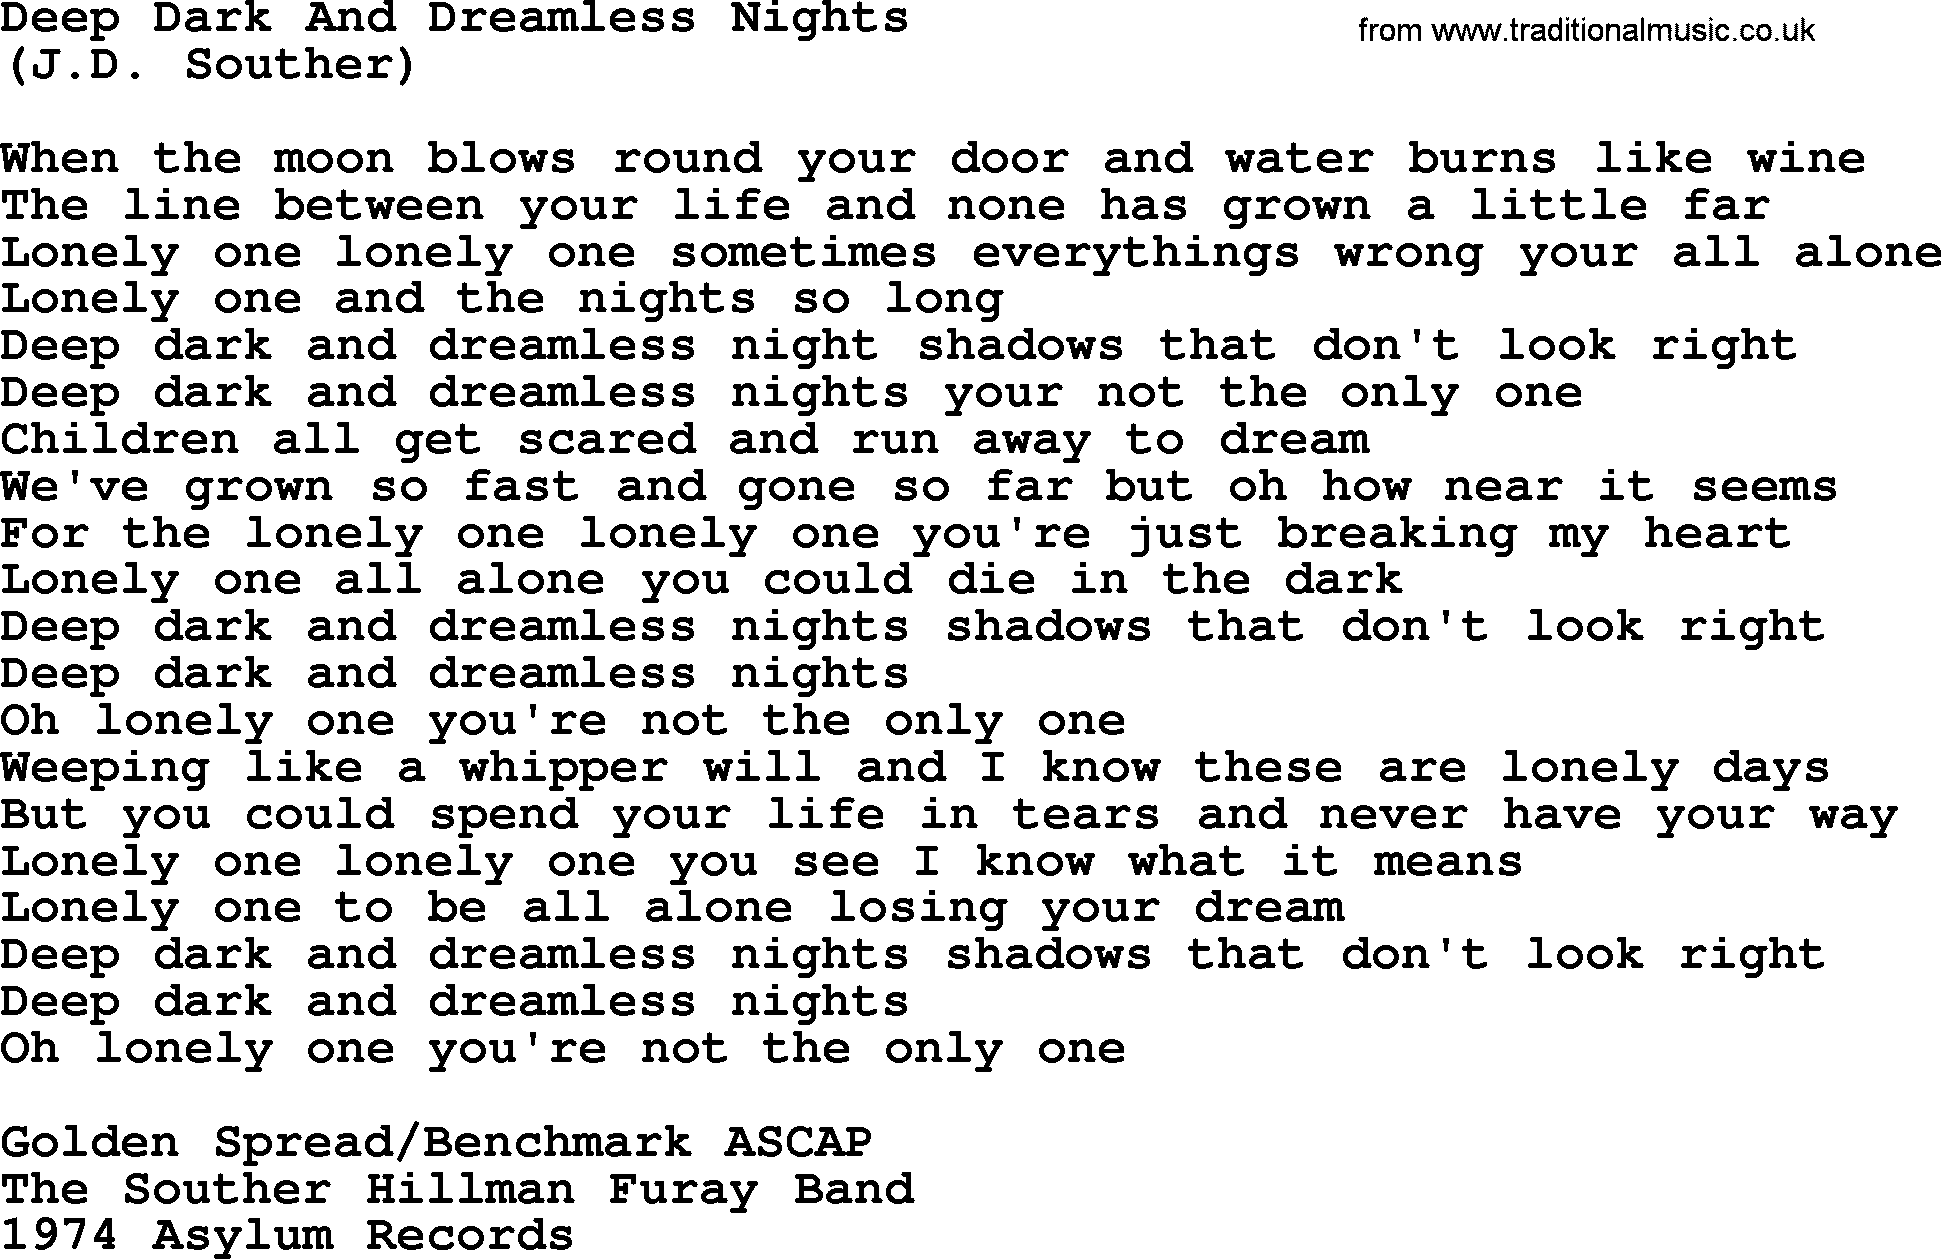 The Byrds song Deep Dark And Dreamless Nights, lyrics